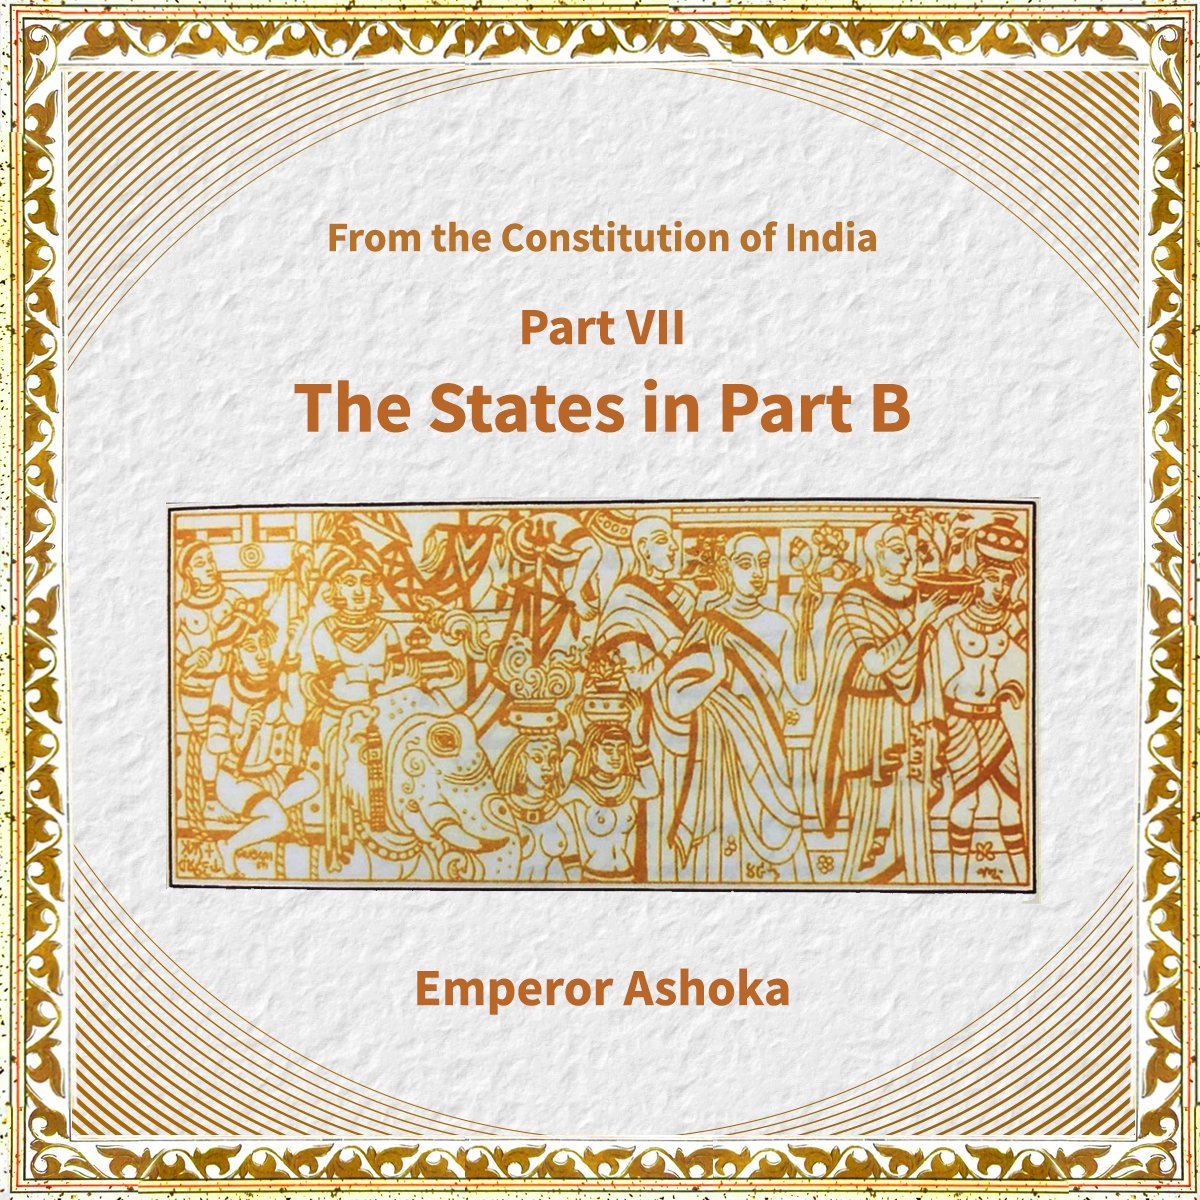 On the Seventh Chapter of the Constitution, image of Emperor Ashoka is given. संविधान के सातवें अध्याय में सम्राट अशोक का चित्र है। 7/17 #SamvidhanDiwas